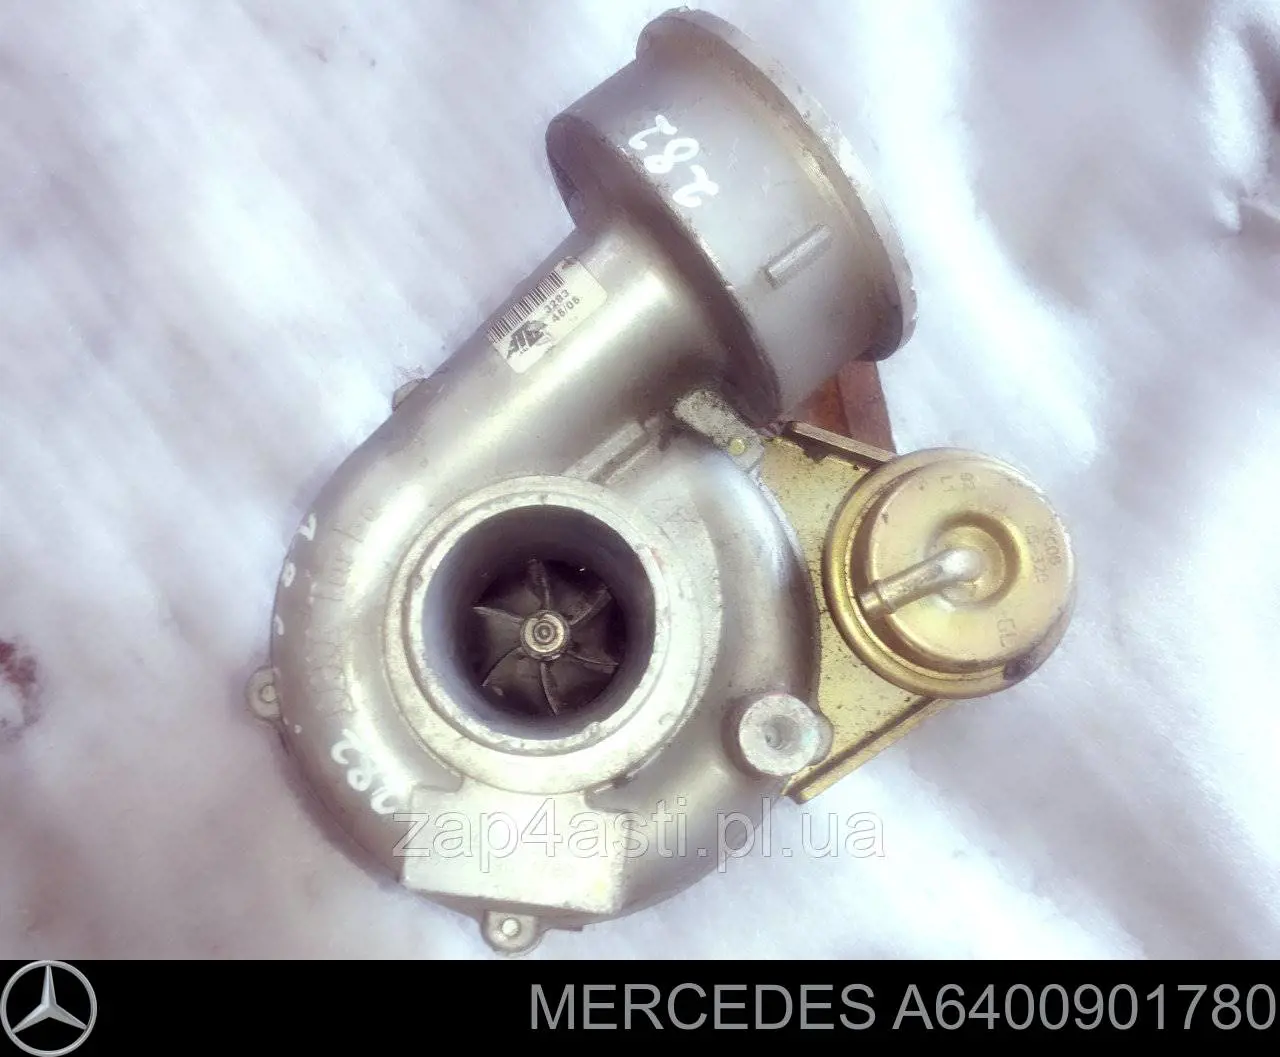 A6400901780 Mercedes turbina